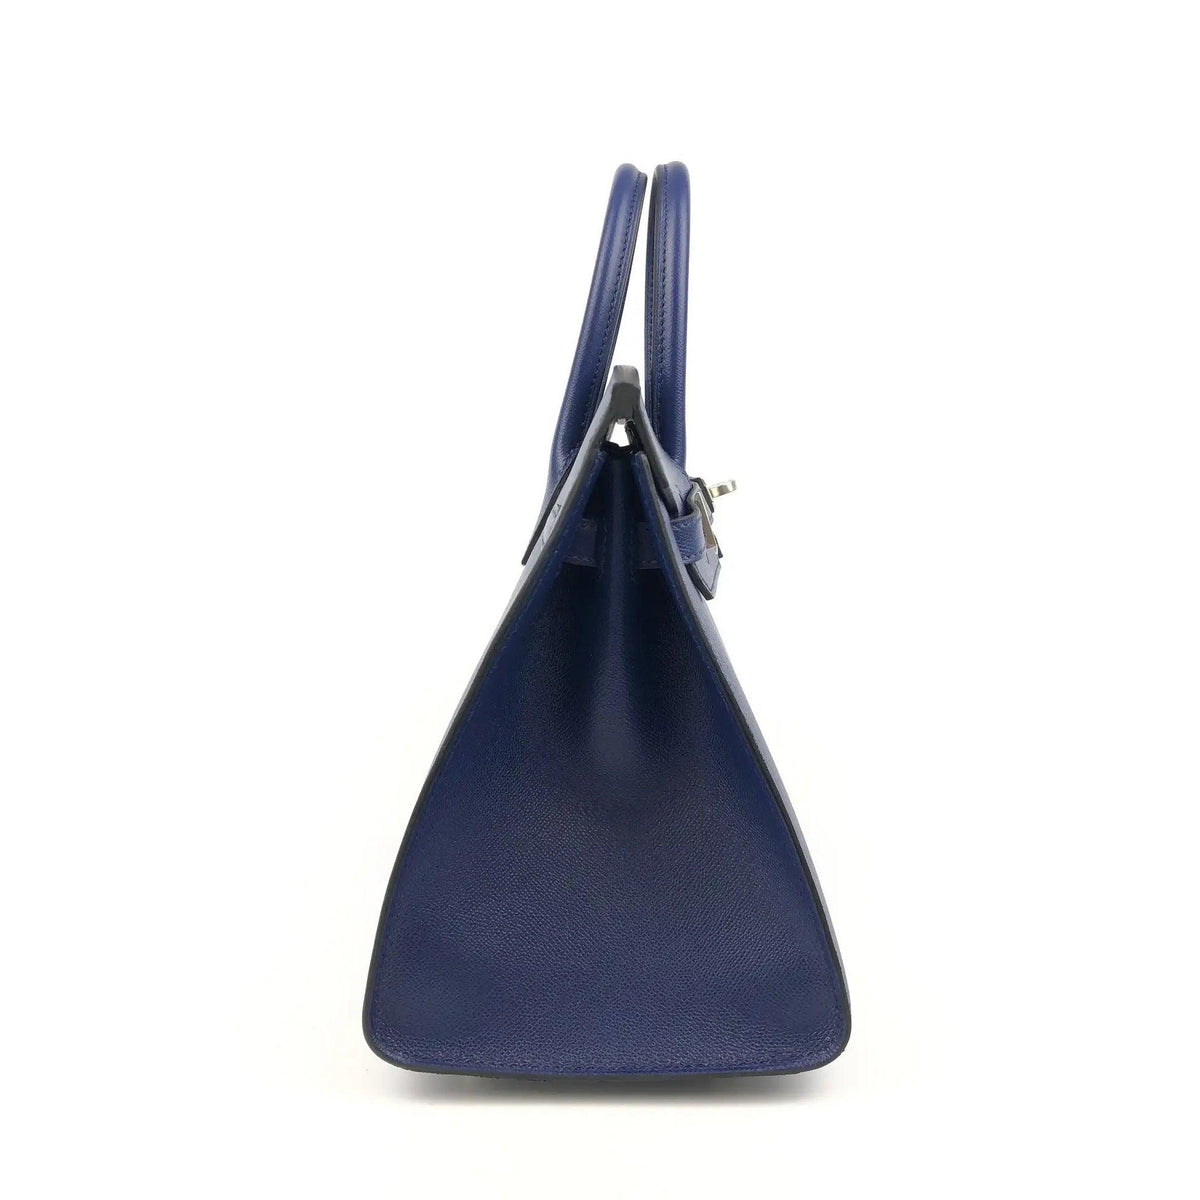 Hermes Birkin 25 Sapphire Blue Sellier Madame Leather Bag